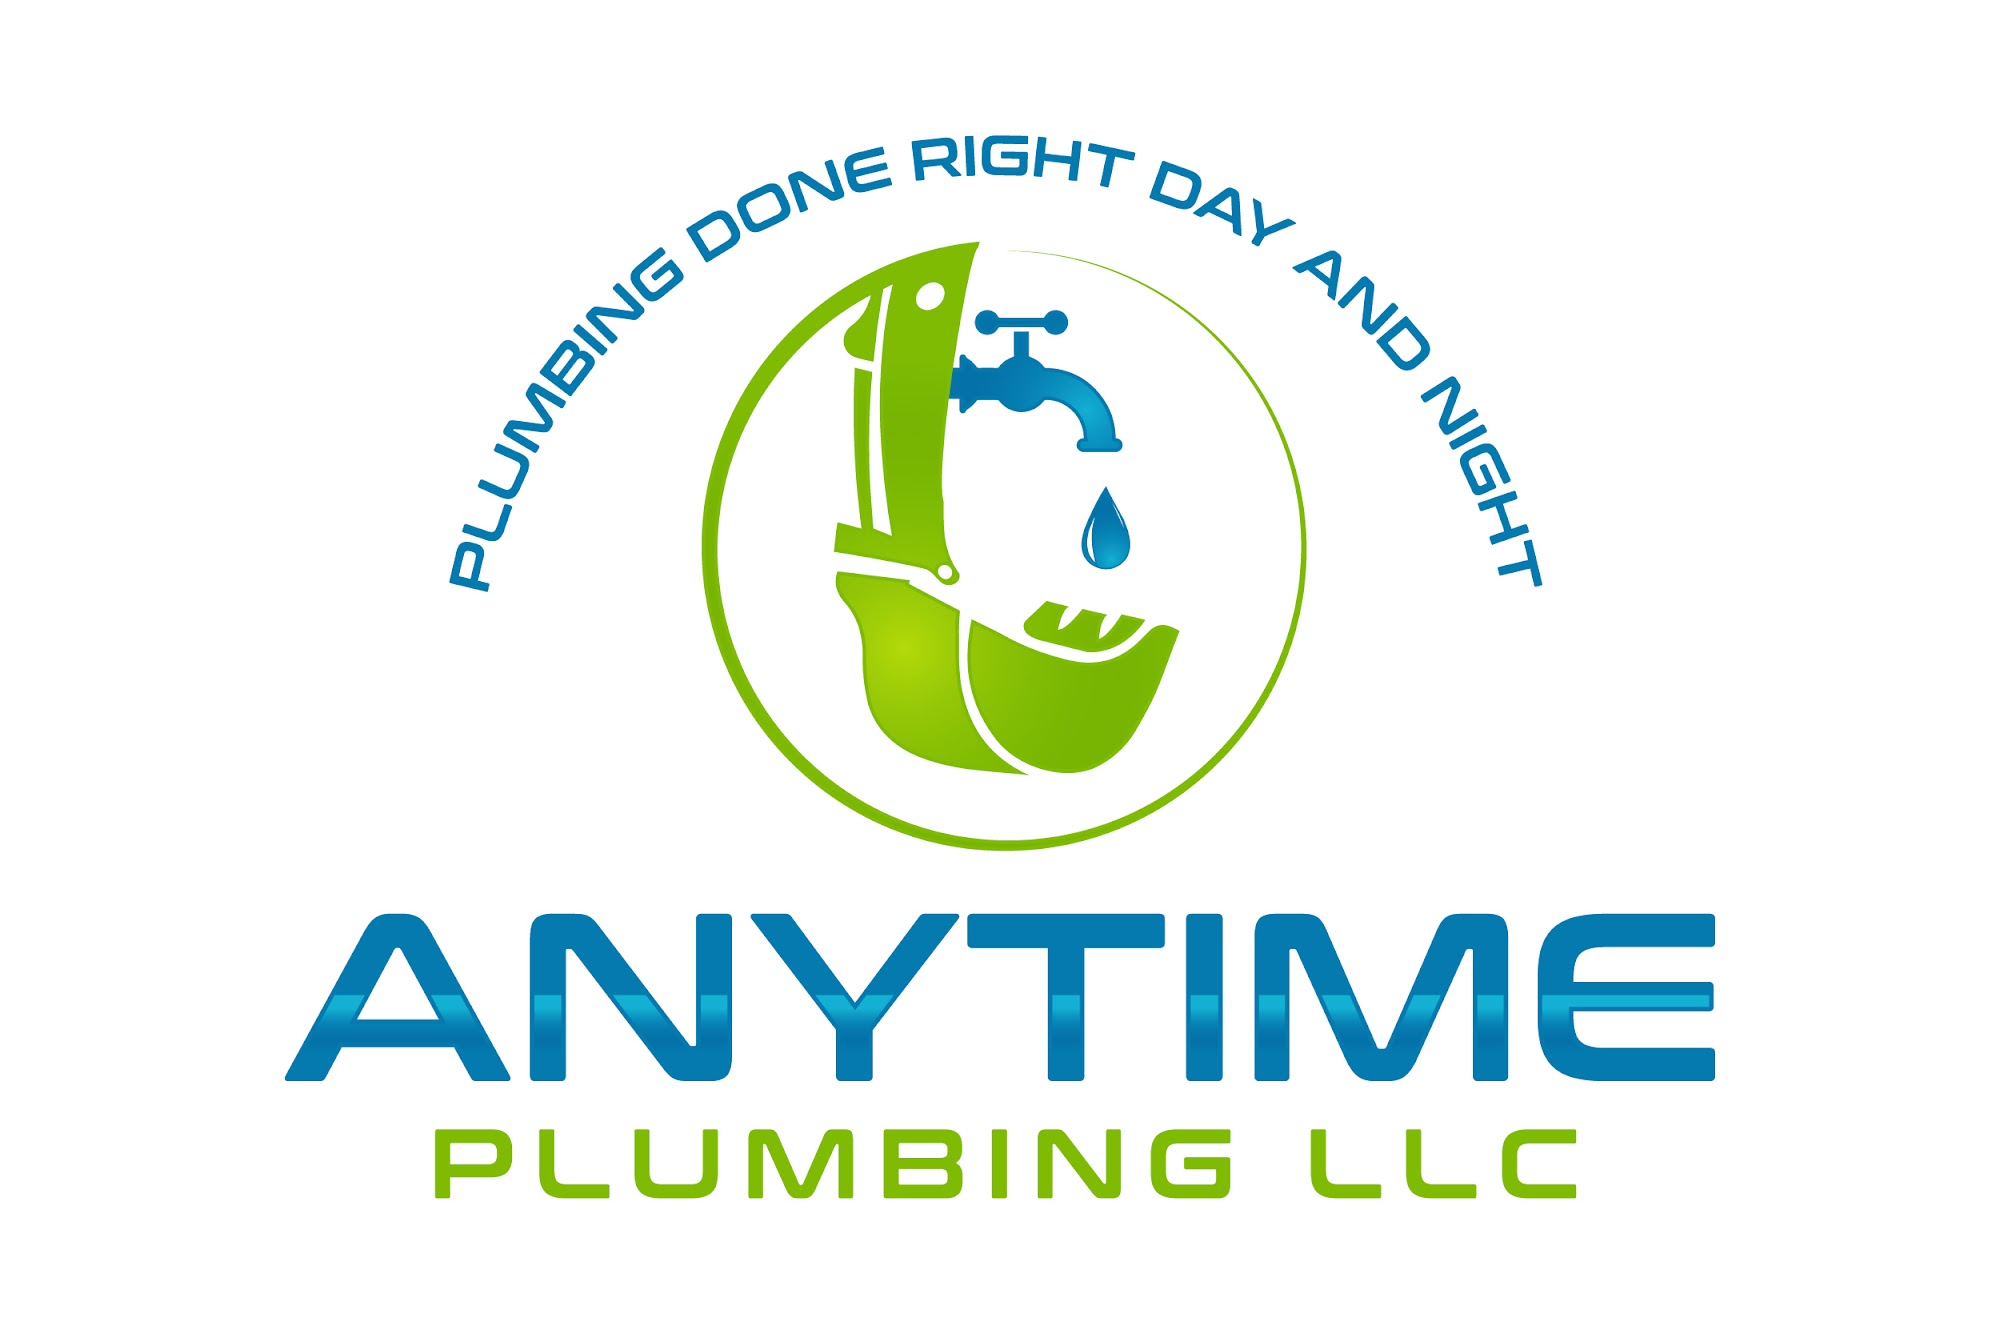 Anytime Plumbing, LLC 5381 Old 60 Ln, Vine Grove Kentucky 40175